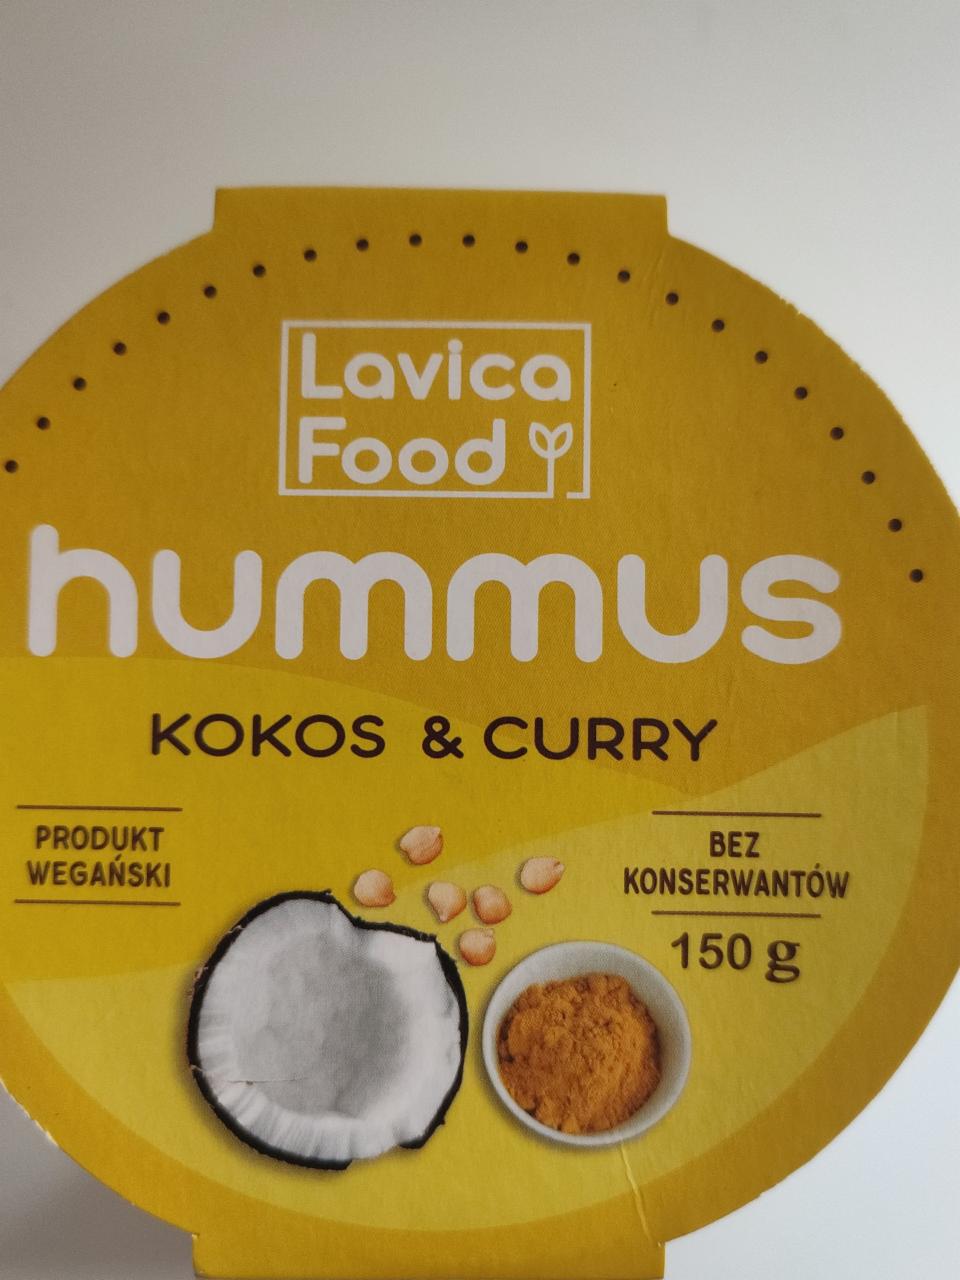 Zdjęcia - hummus kokos & curry Lovica Food